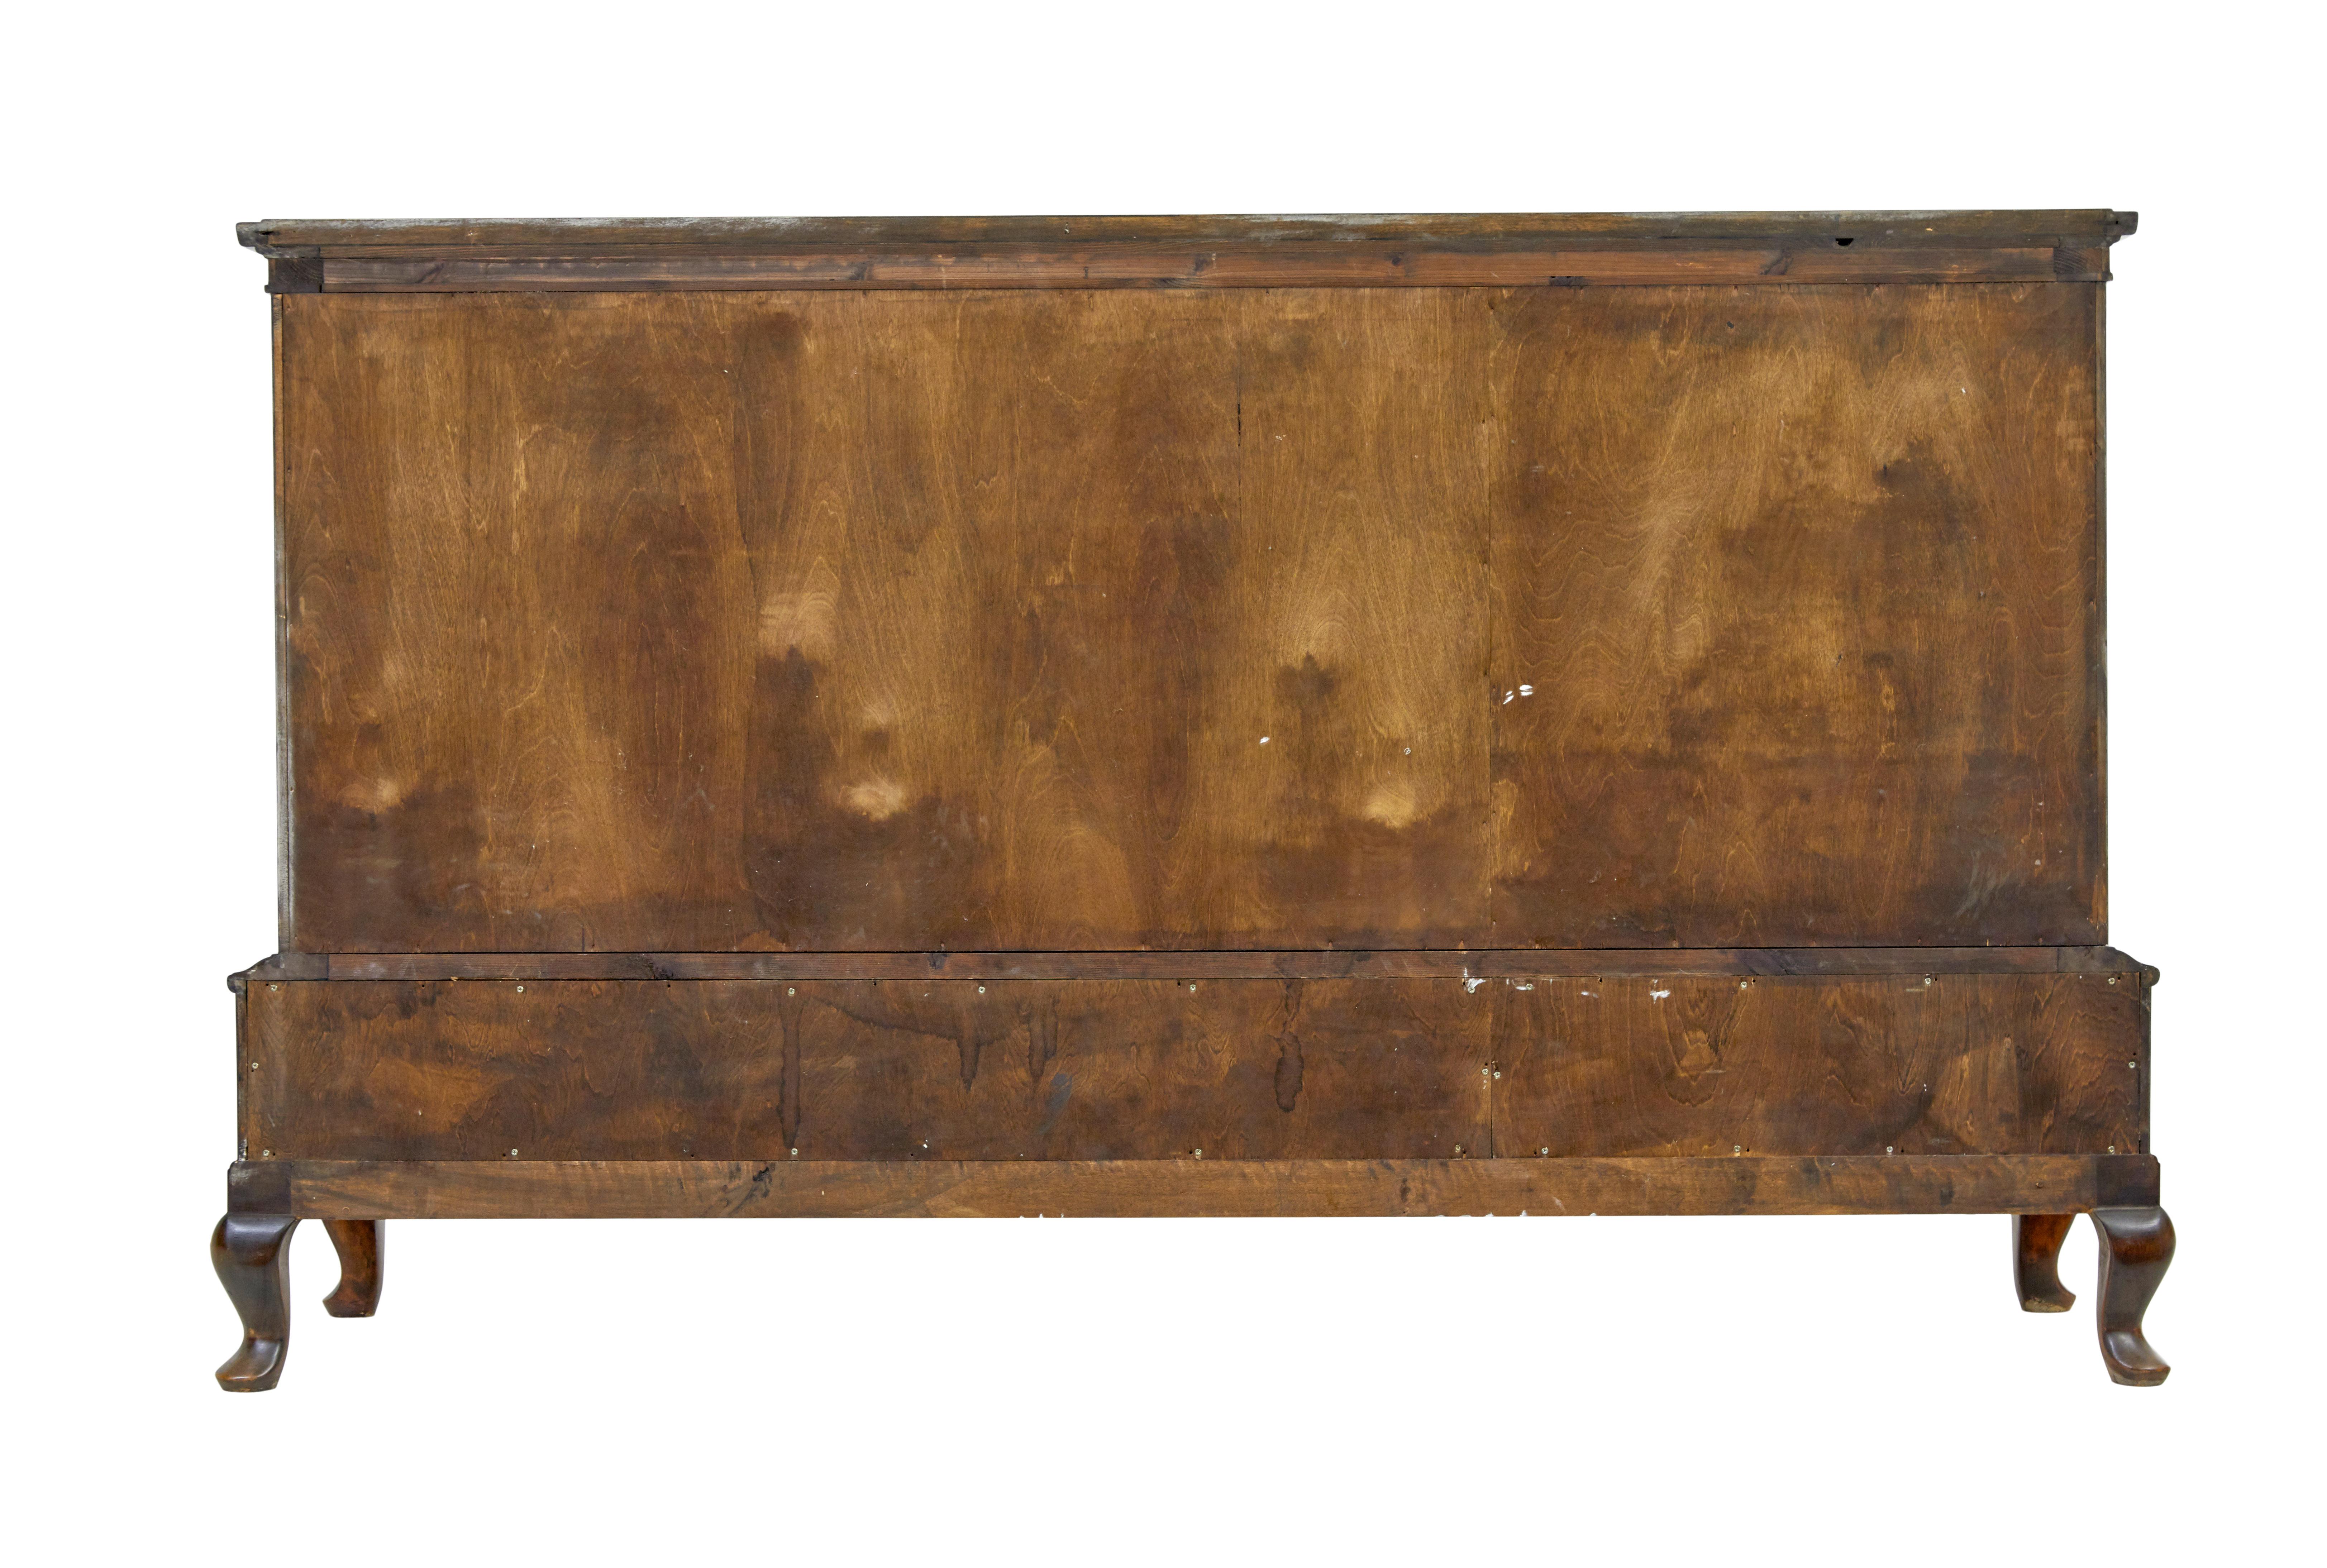 20th century burr birch sideboard by Bodafors In Good Condition For Sale In Debenham, Suffolk